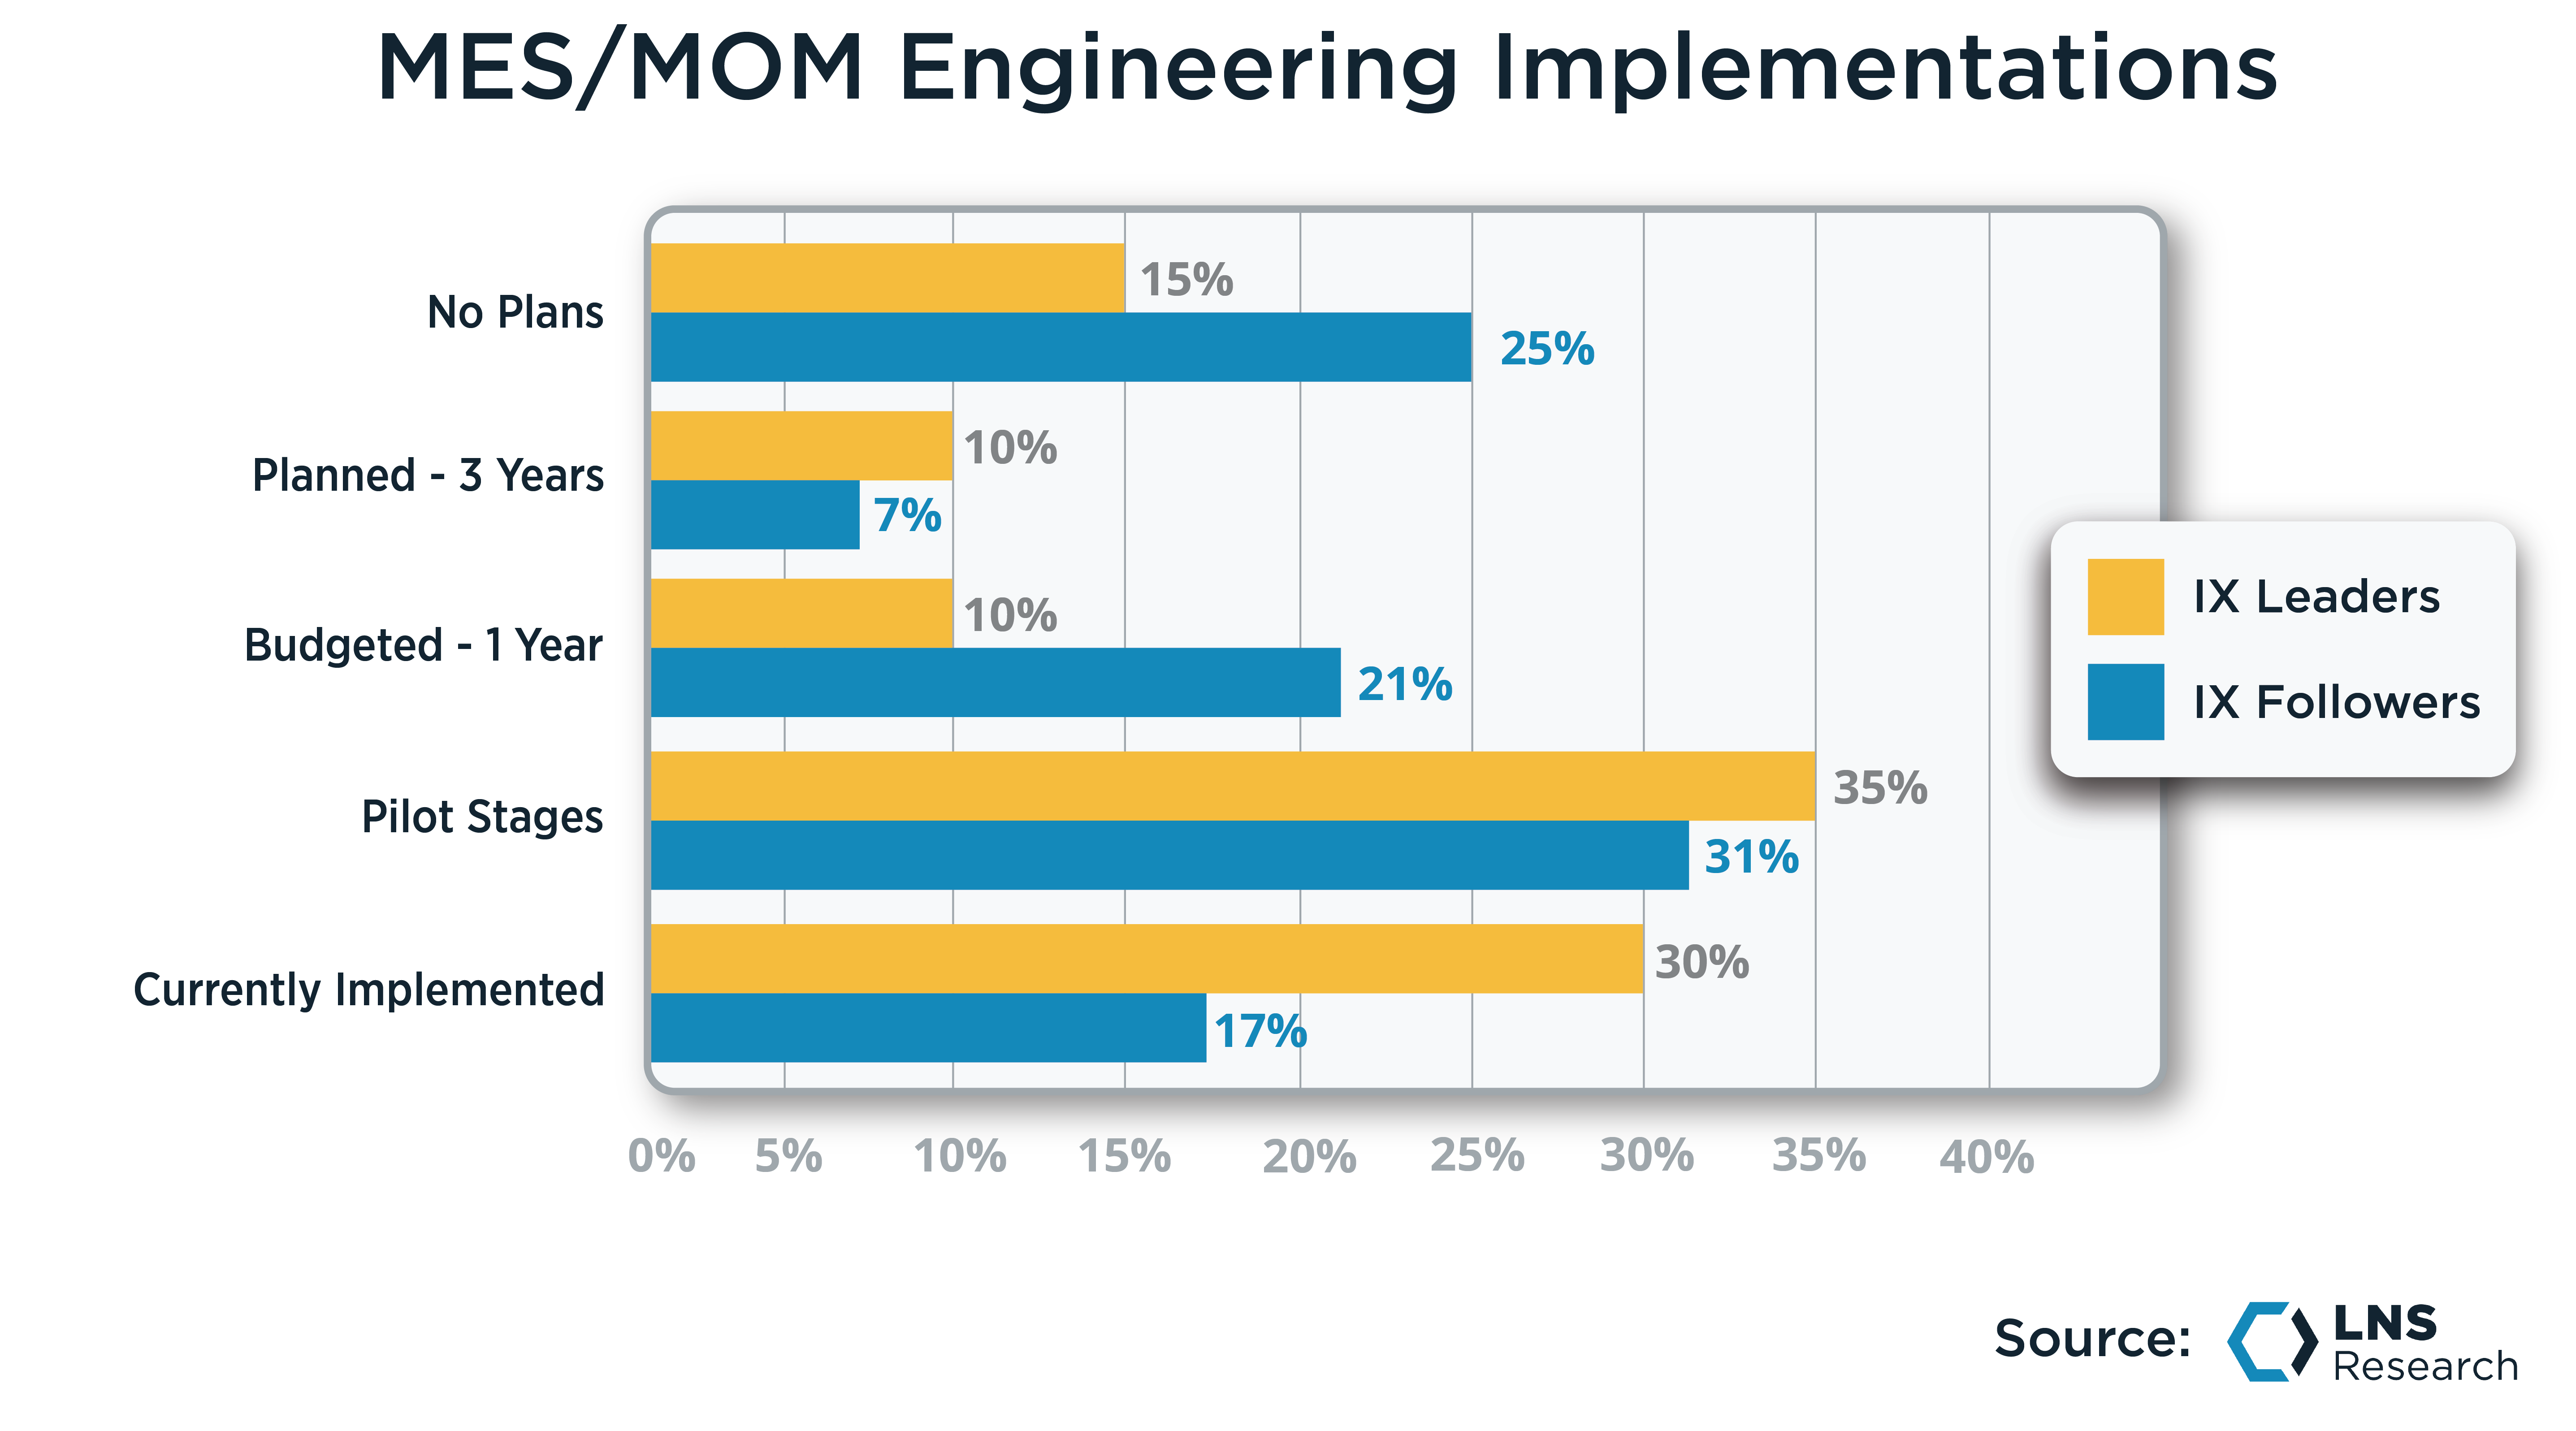 MES/MOM Engineering Implementations, IX Leaders vs. IX Followers